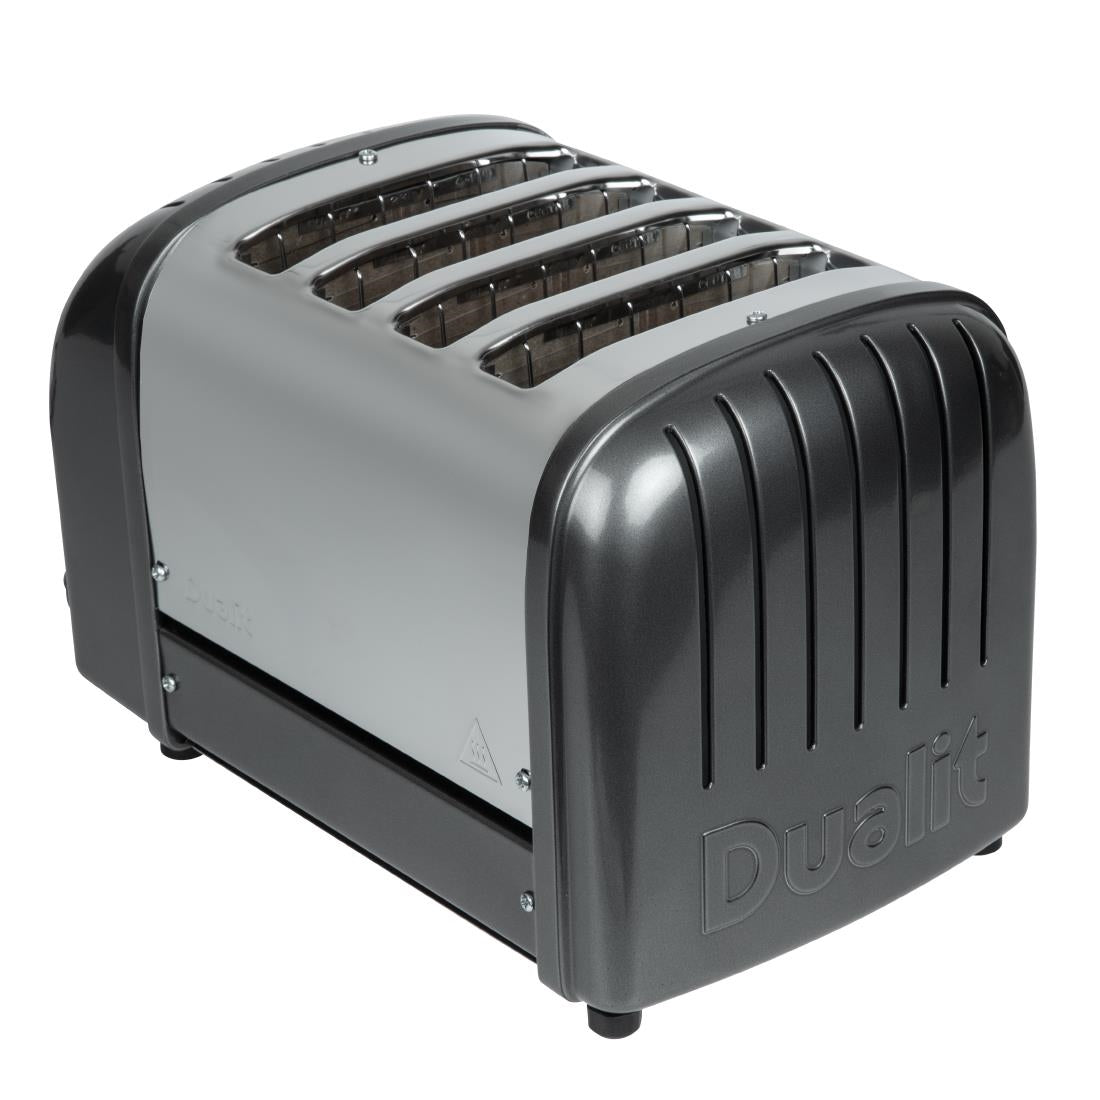 Dualit 2 x 2 Combi Vario 4 Slice Toaster Metallic Charcoal 42170 JD Catering Equipment Solutions Ltd